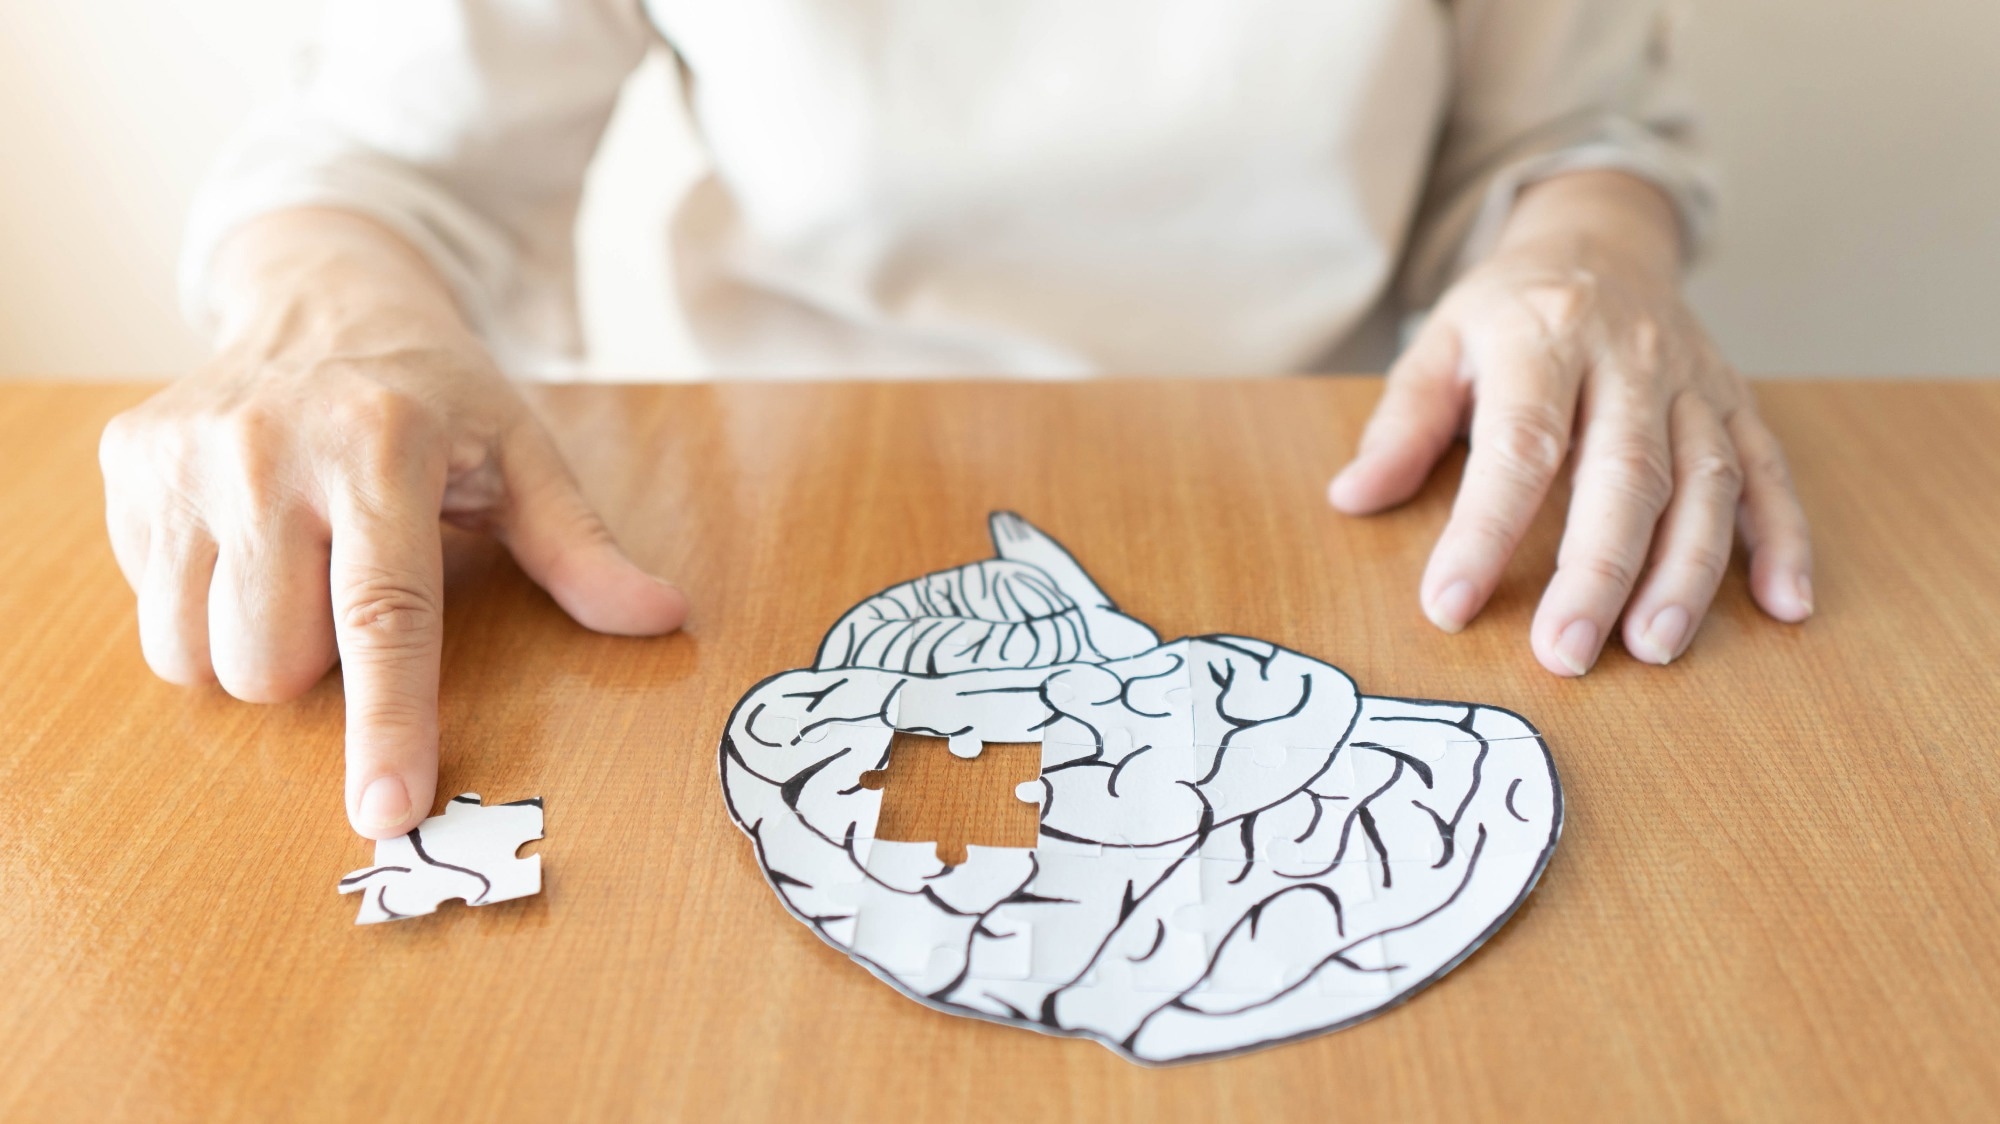 Study: Posttraumatic Epilepsy and Dementia Risk. Image Credit: Orawan Pattarawimonchai/Shutterstock.com